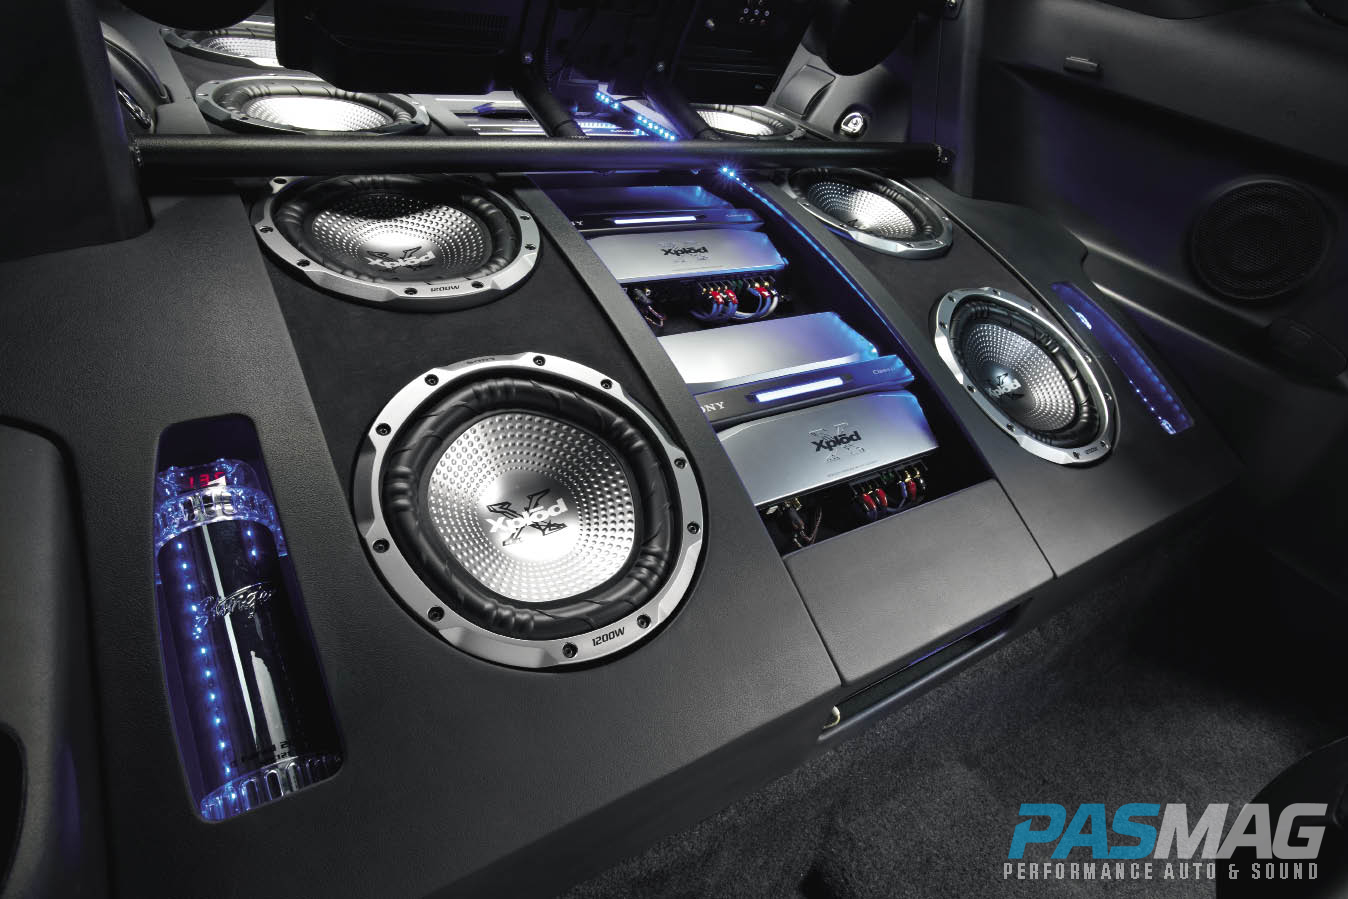 Крутые новинки музыки в машину. Car Audio System 60wx4. Car Audio в Bentley Continental 2008 Speakers. Sony car Audio System. Сабвуфер GB car Audio System.